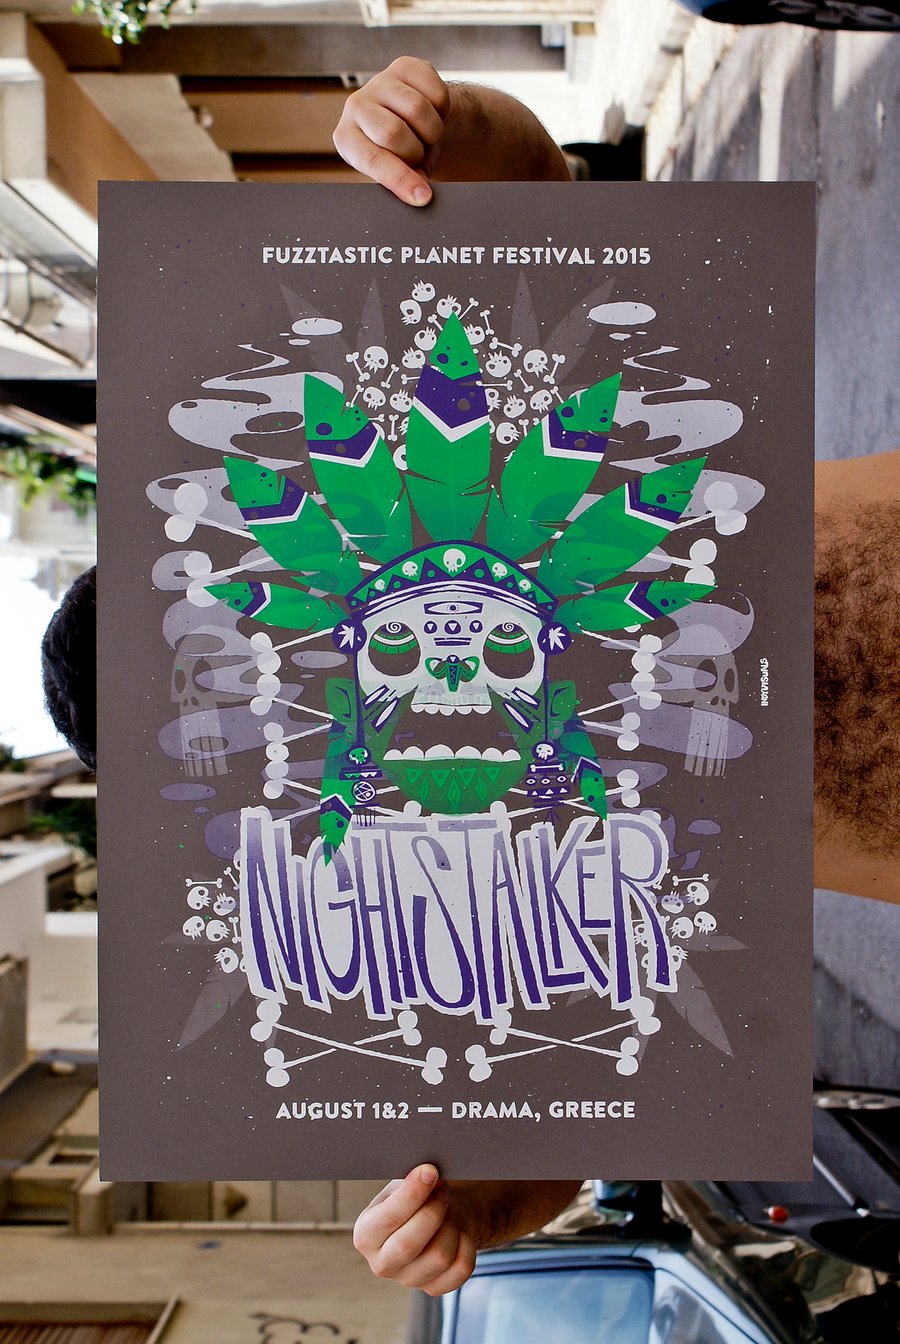 Image of Nightstalker poster